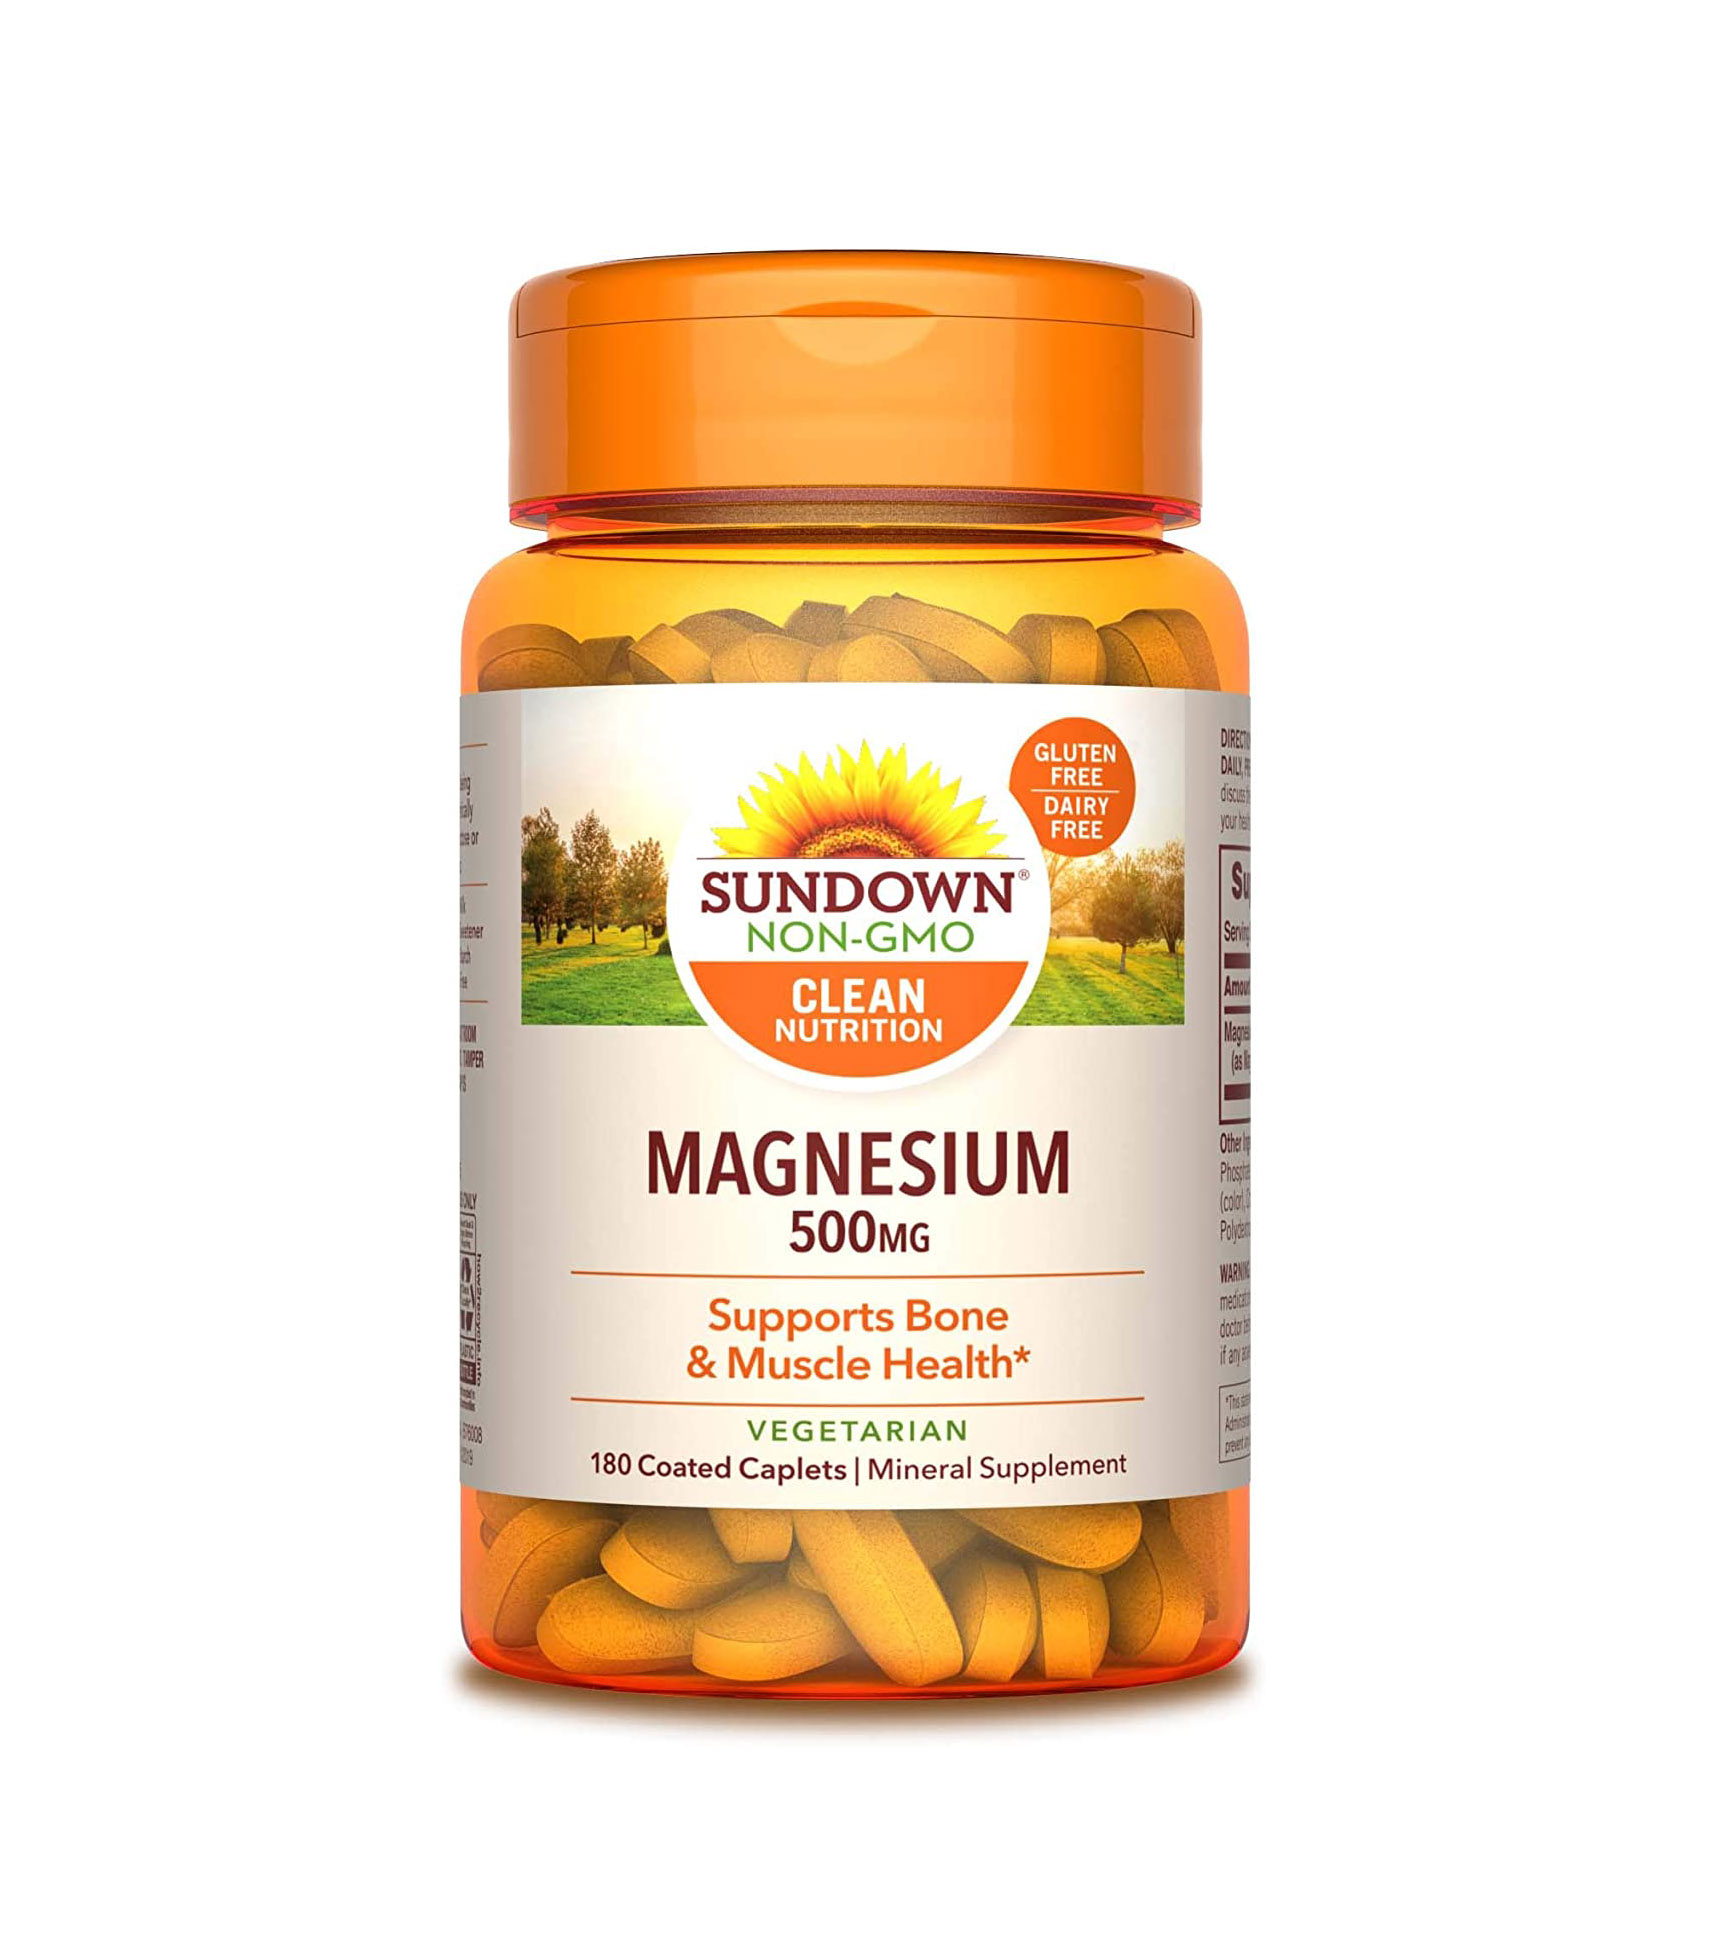 Sundown + Magnesium Supplement